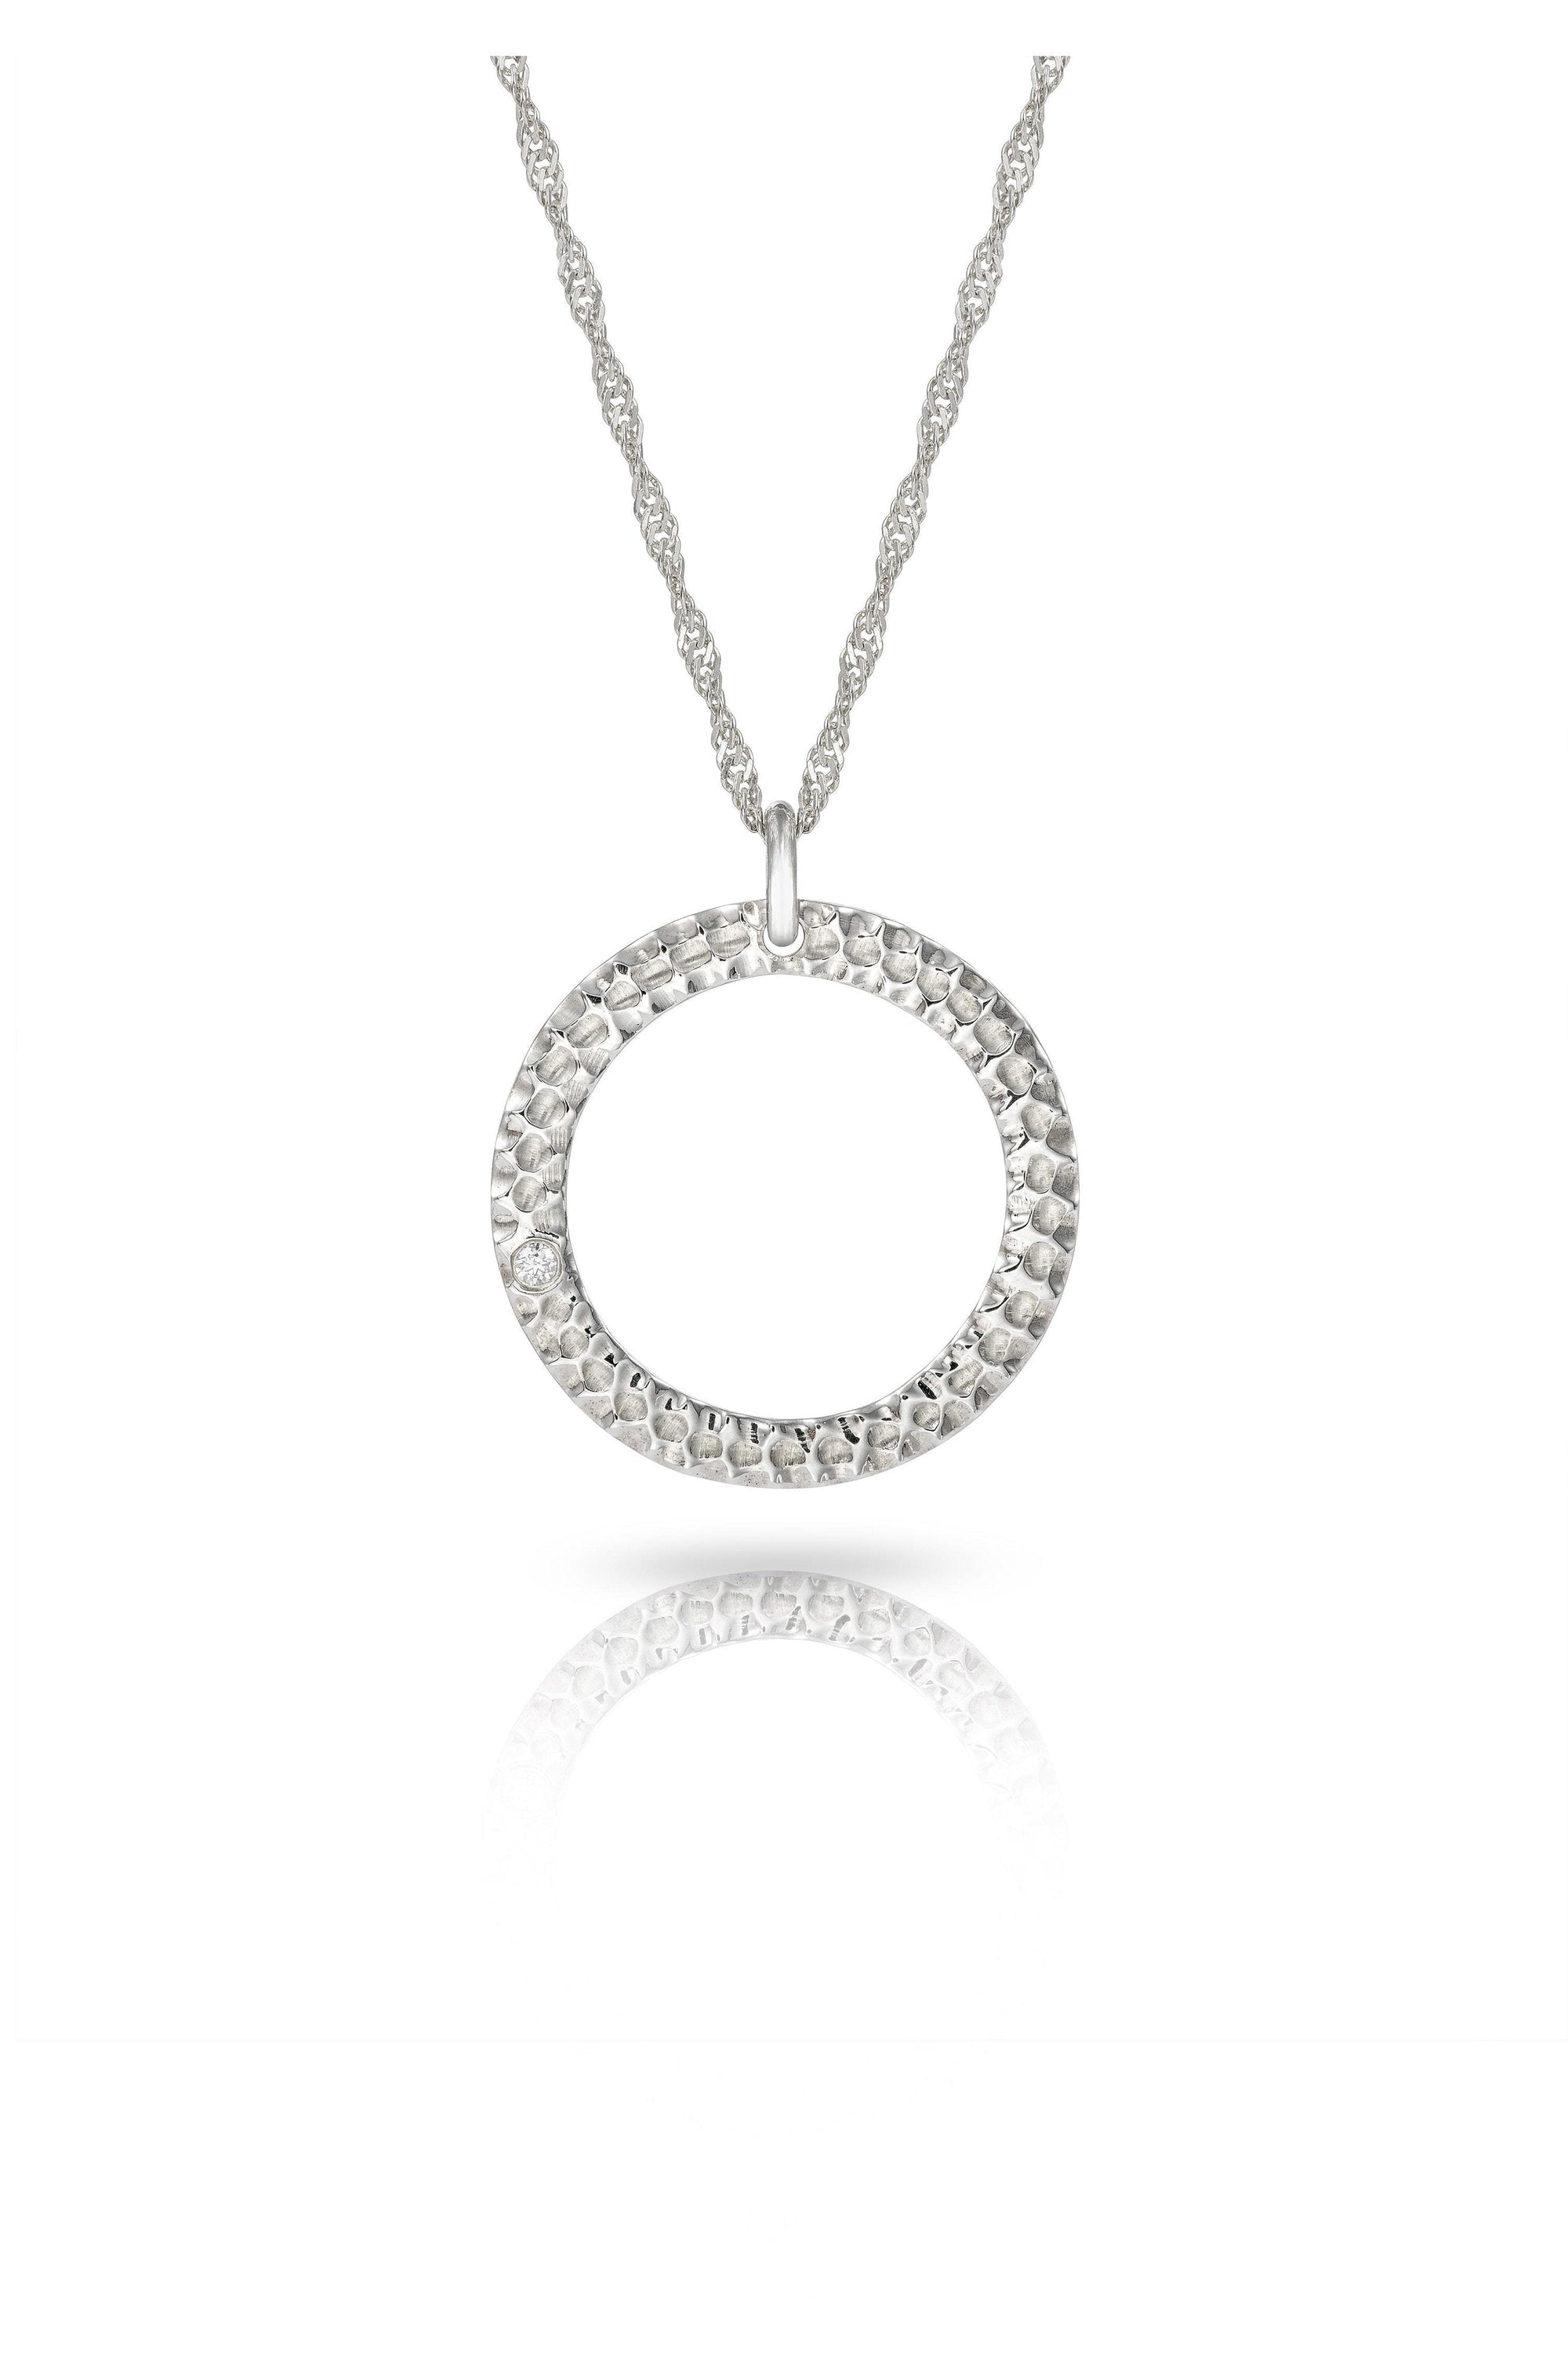 9 carat Gold Halo Necklace with White Diamond-The Diamond Setter